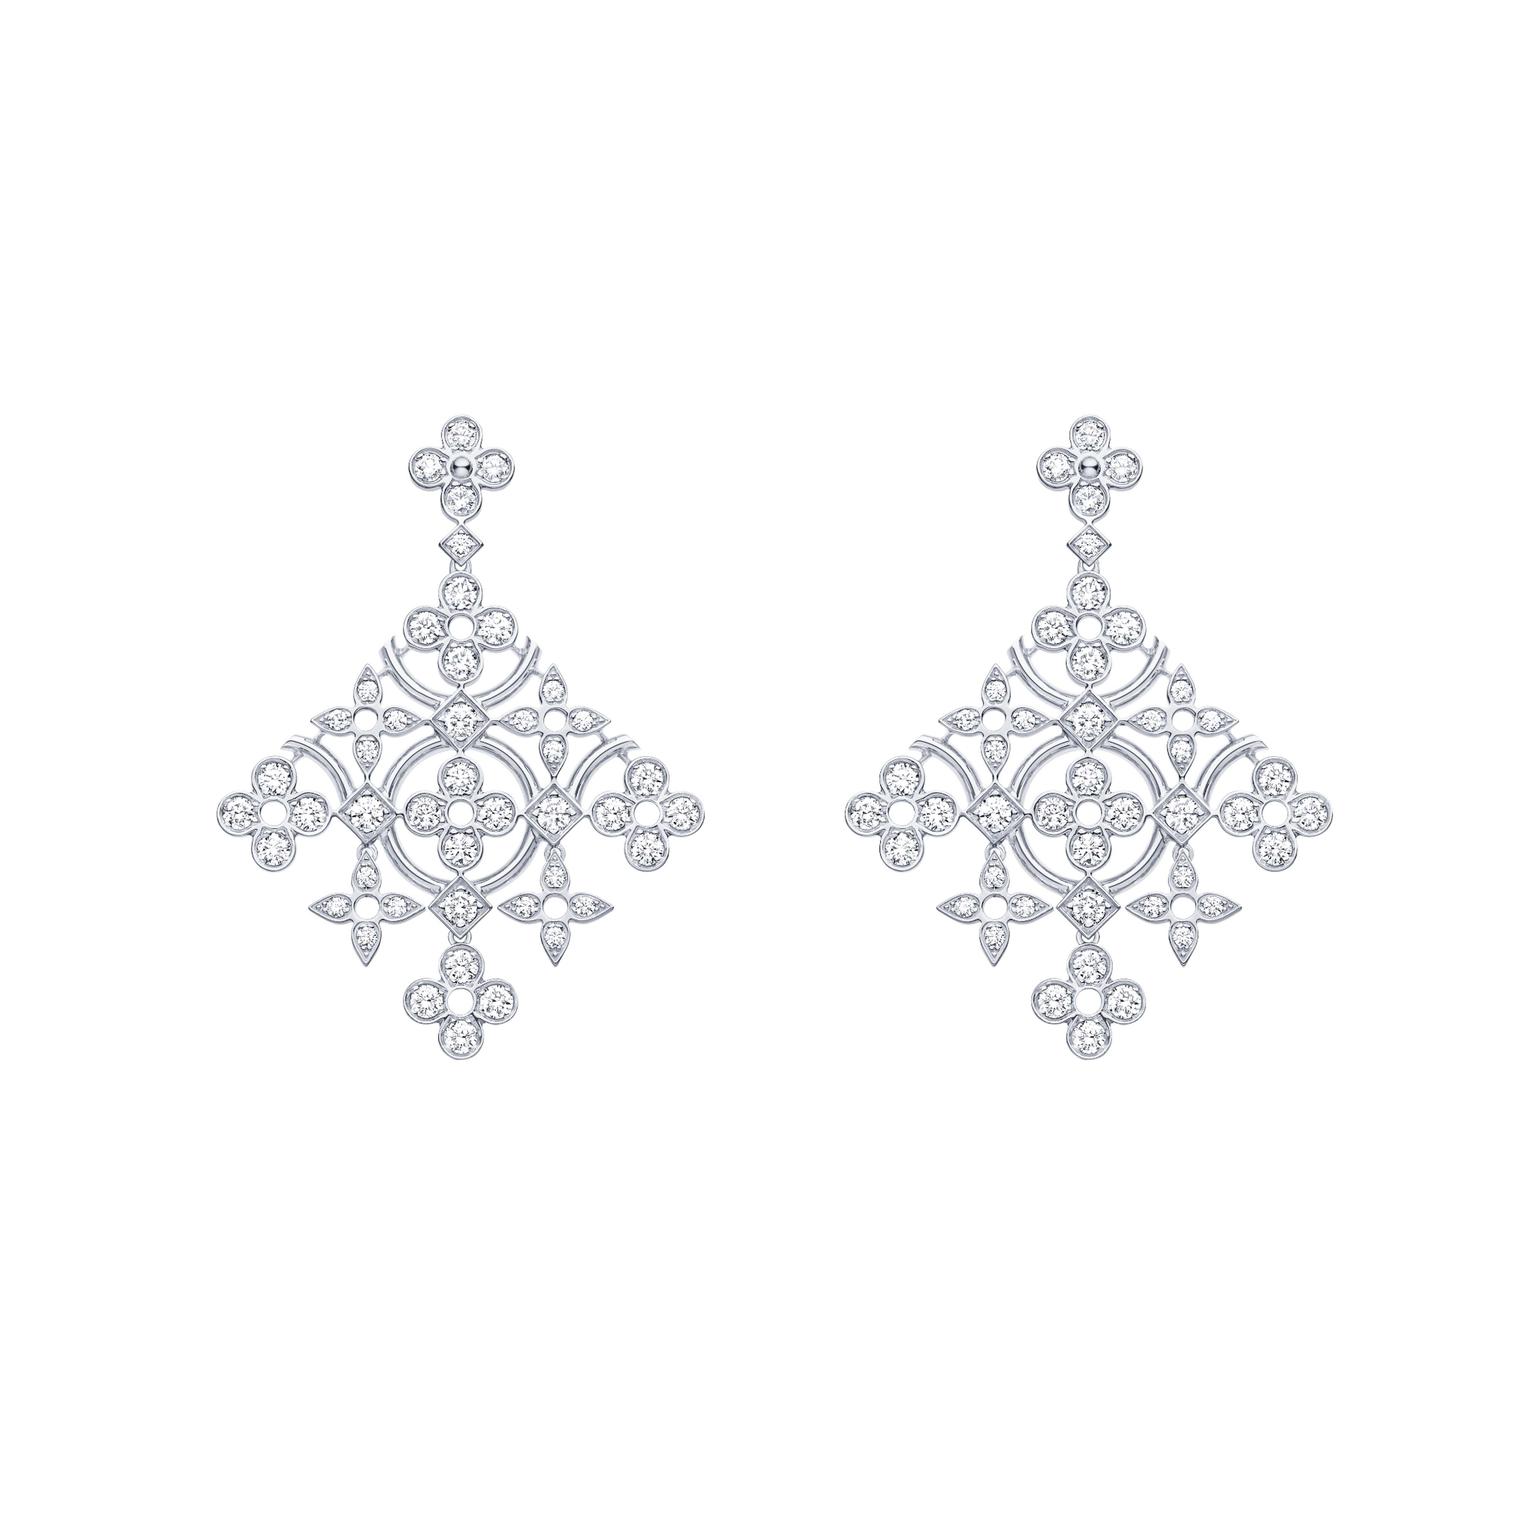 Louis Vuitton Dentelle de Monogram diamond earrings in white